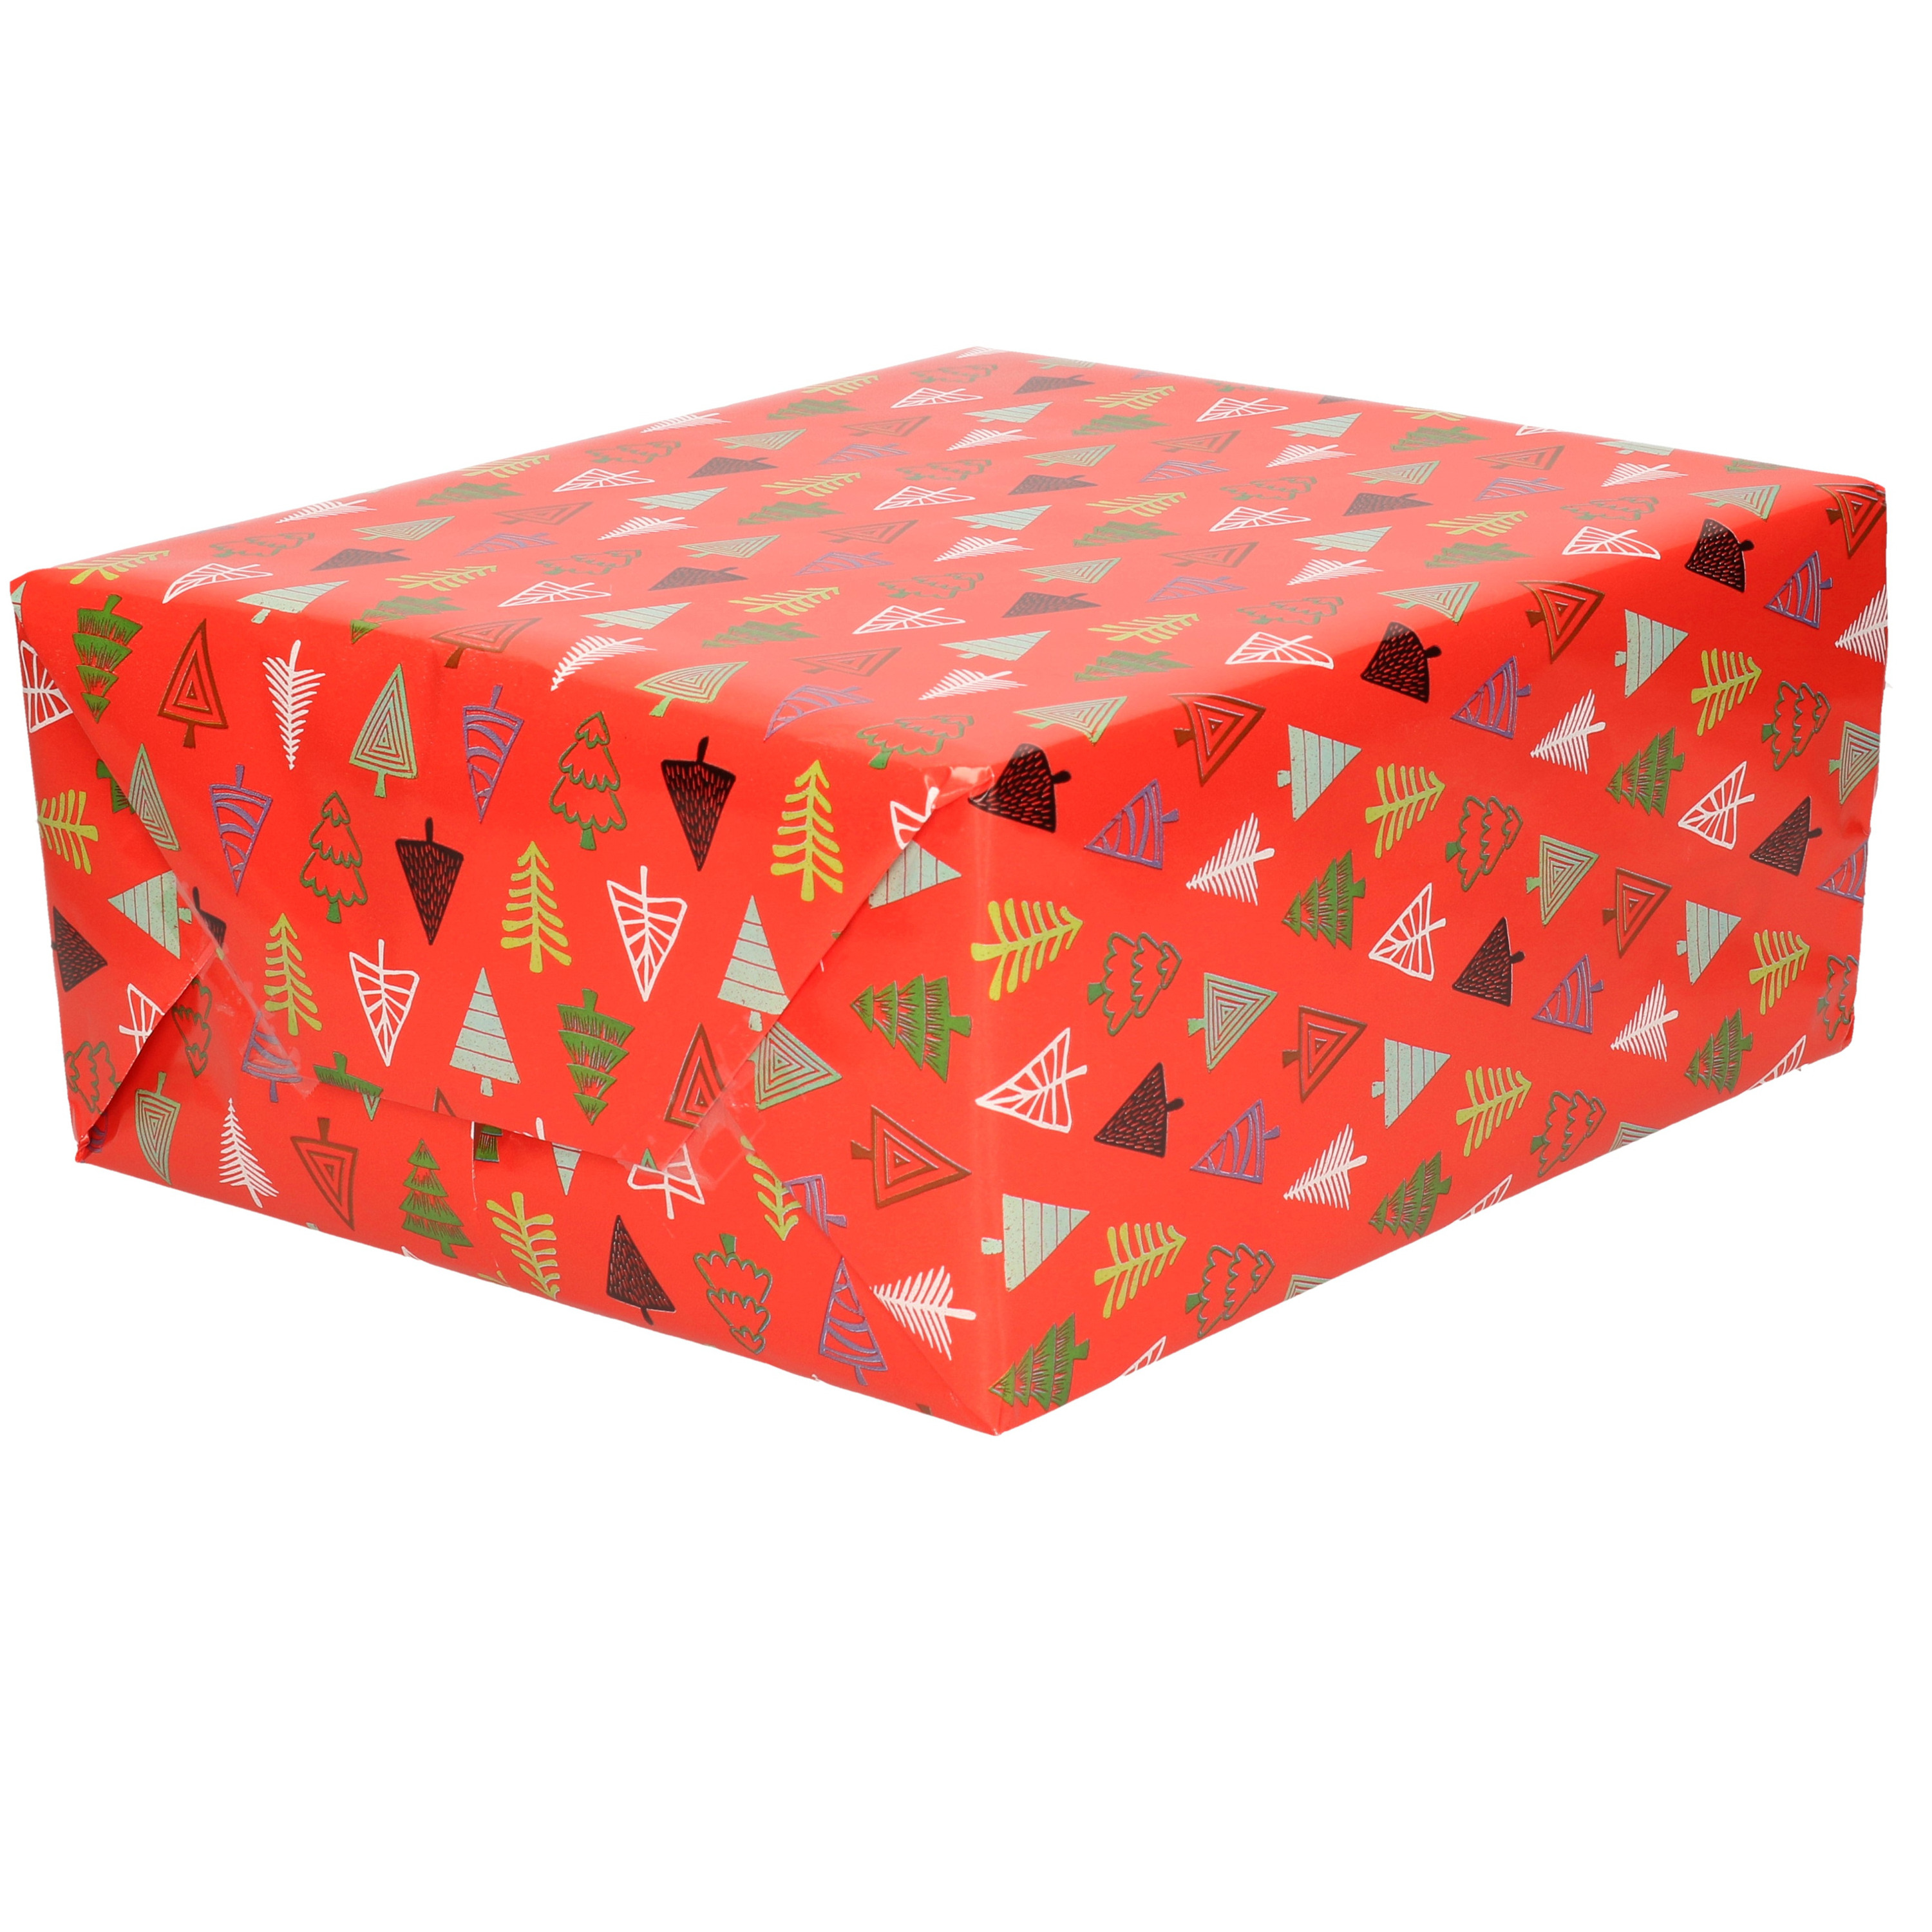 1x Rollen Kerst inpakpapier-cadeaupapier rood 2,5 x 0,7 meter